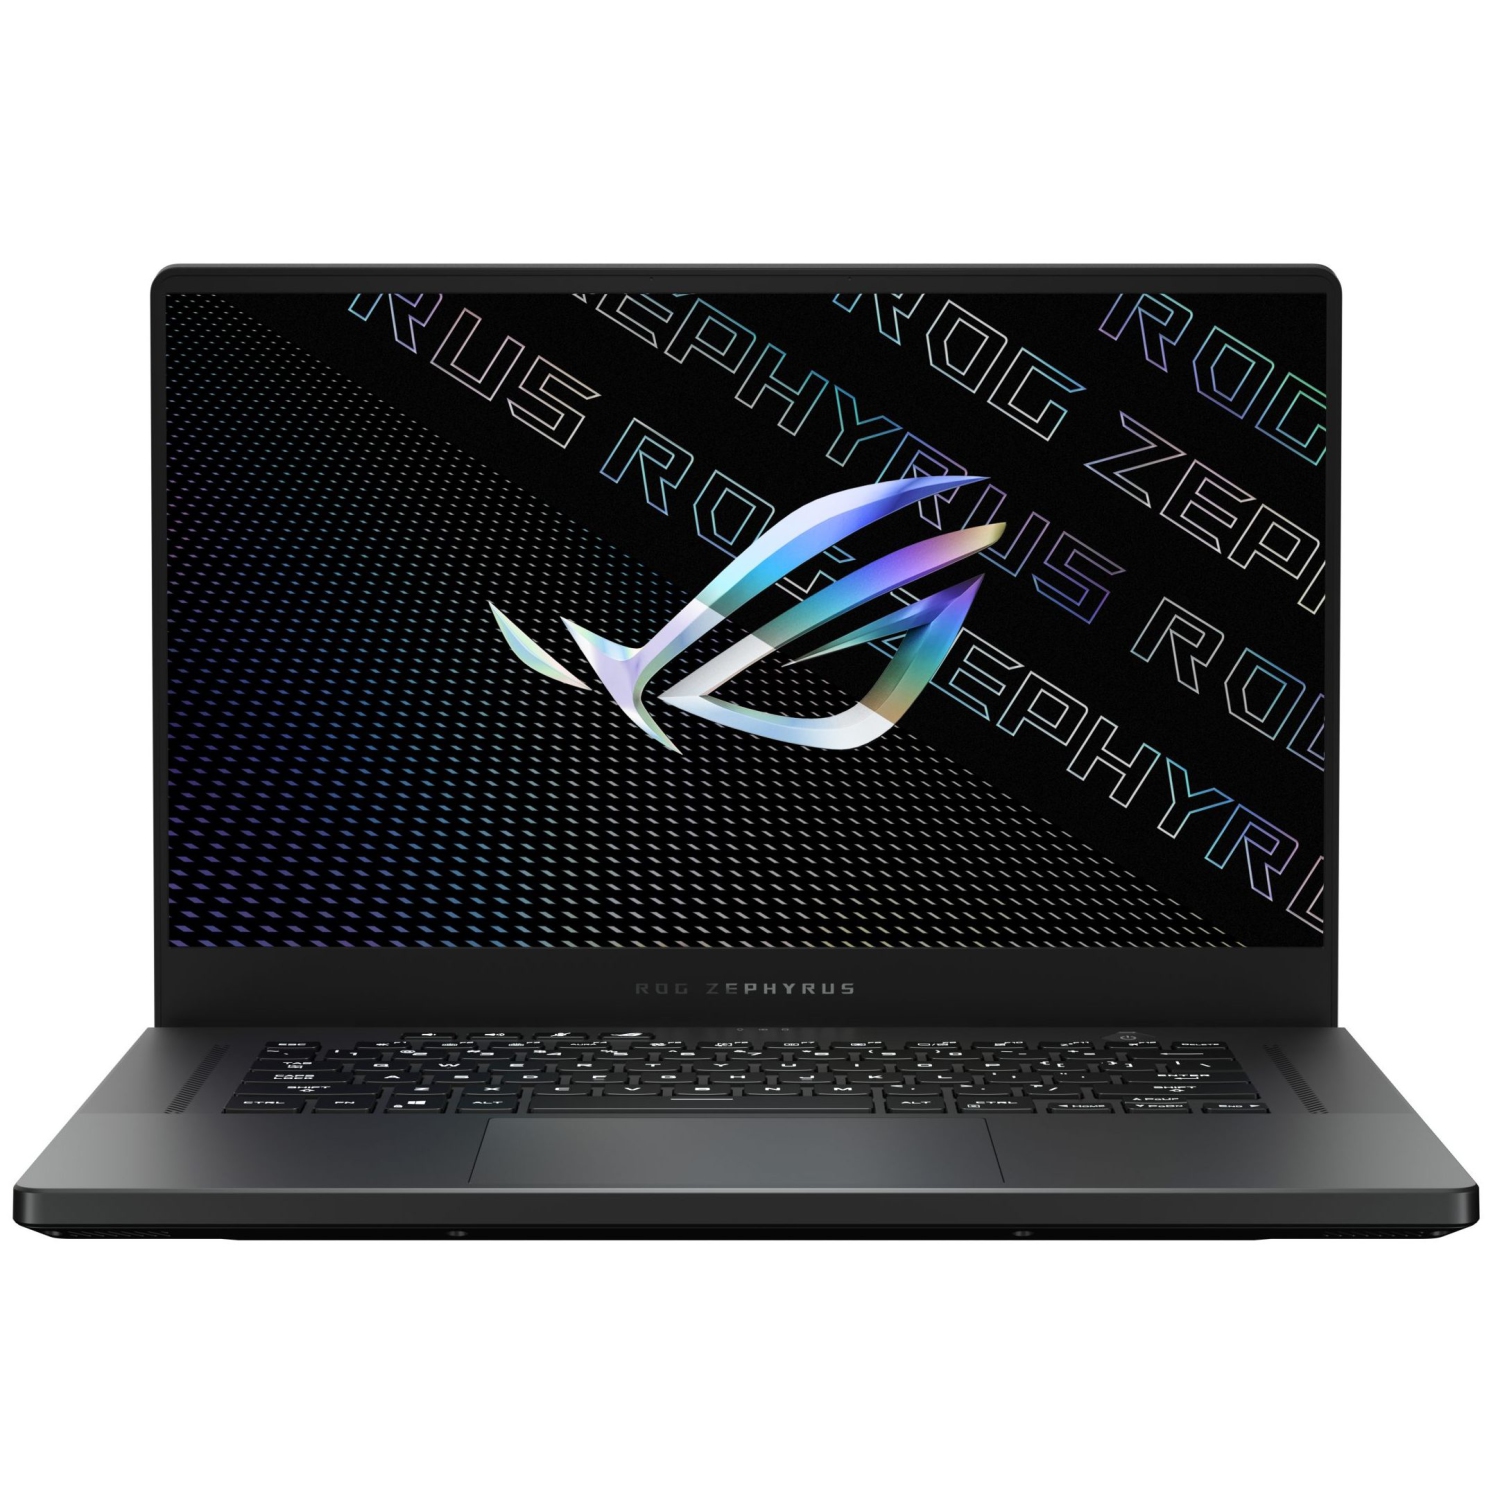 Custom ASUS ROG Zephyrus G15 Laptop (AMD Ryzen 9 5900HS, 40GB RAM, 1TB m.2 SATA SSD, NVIDIA RTX 3070, Win 10 Home)